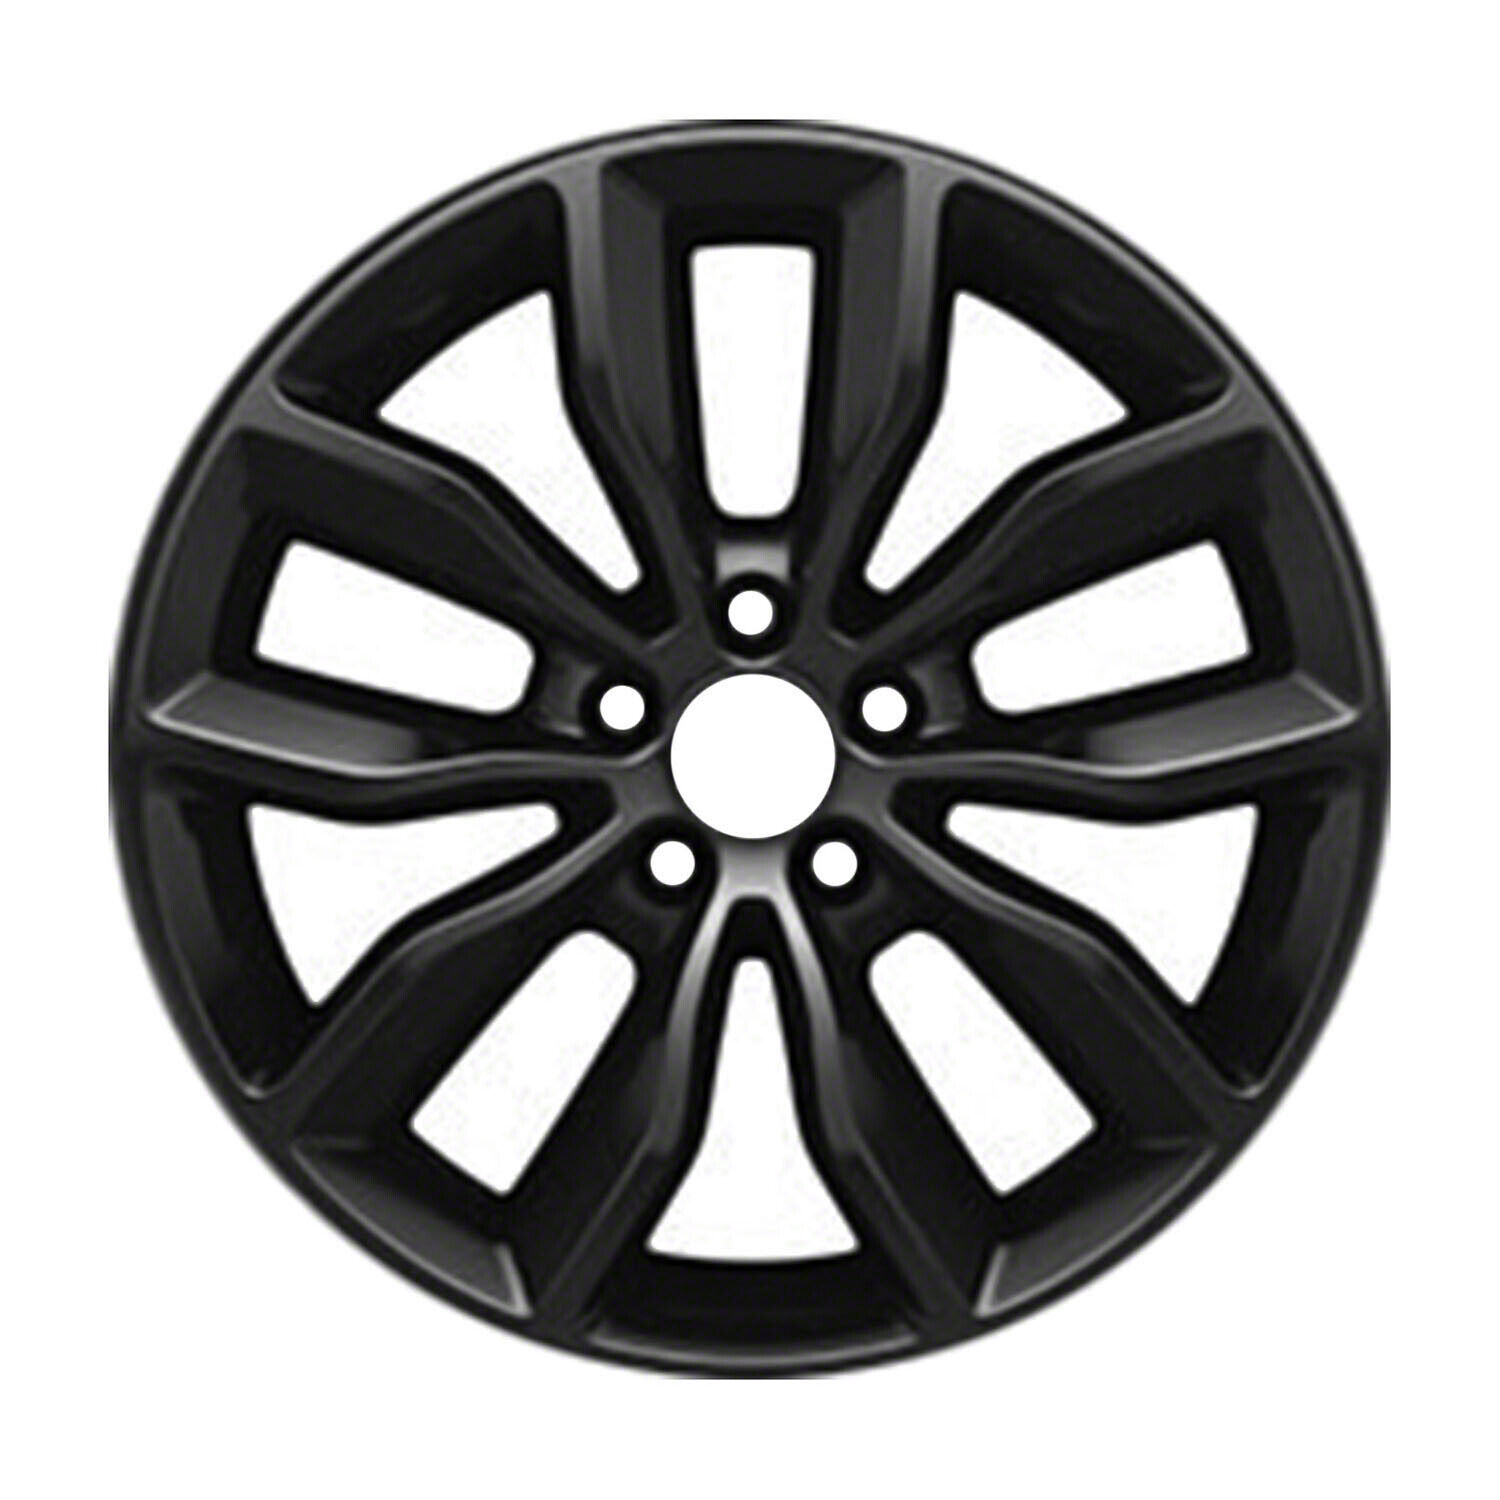 02564 Reconditioned OEM Aluminum Wheel 18x7.5 fits 2016 Dodge Dart